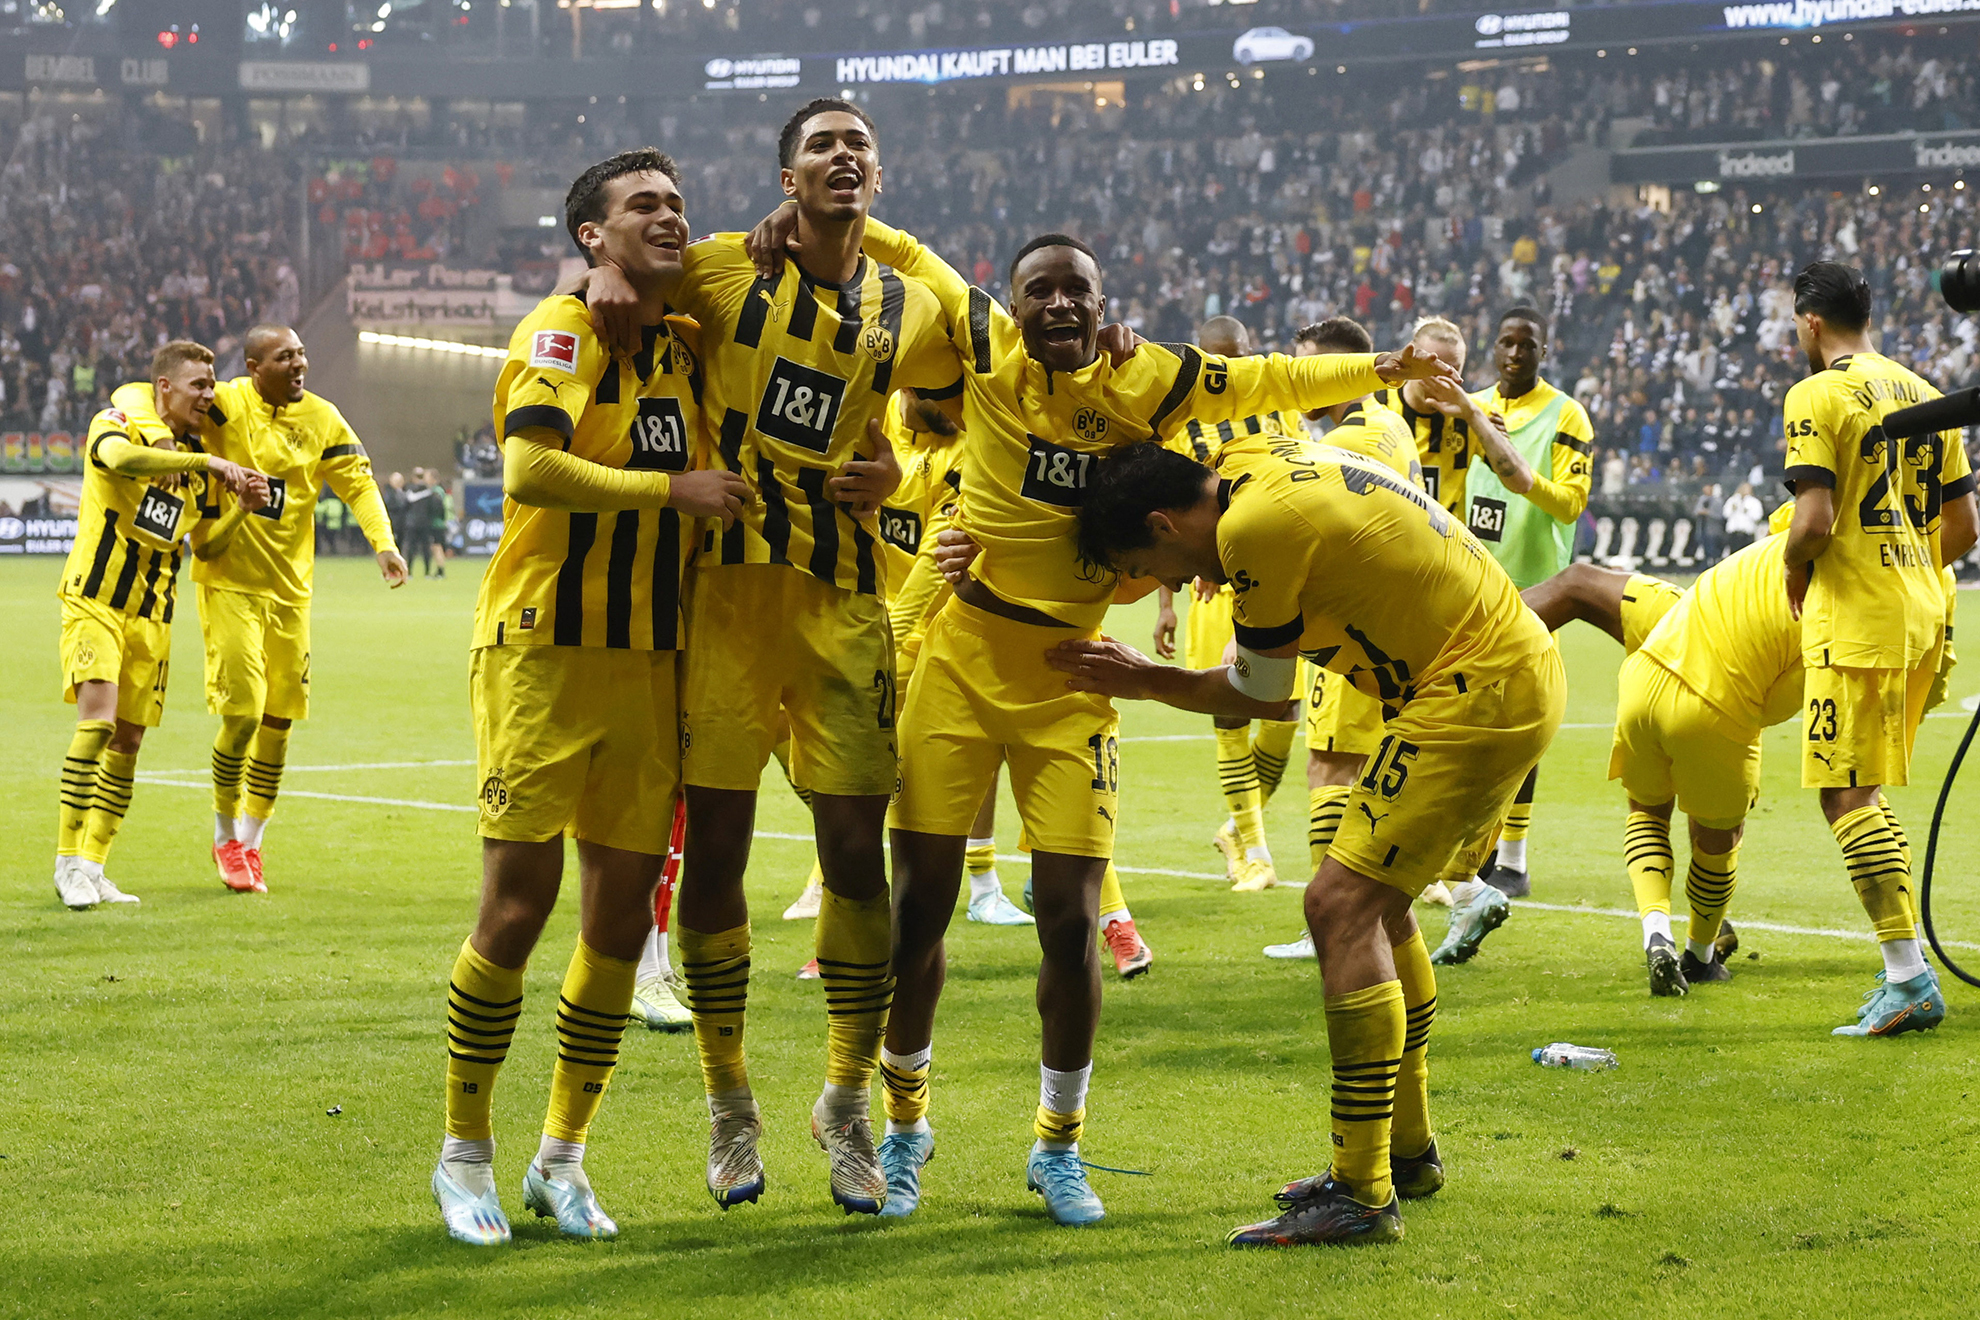 Copenhague vs Borussia Dortmund, en vivo juego de la jornada 6 de la Champions League